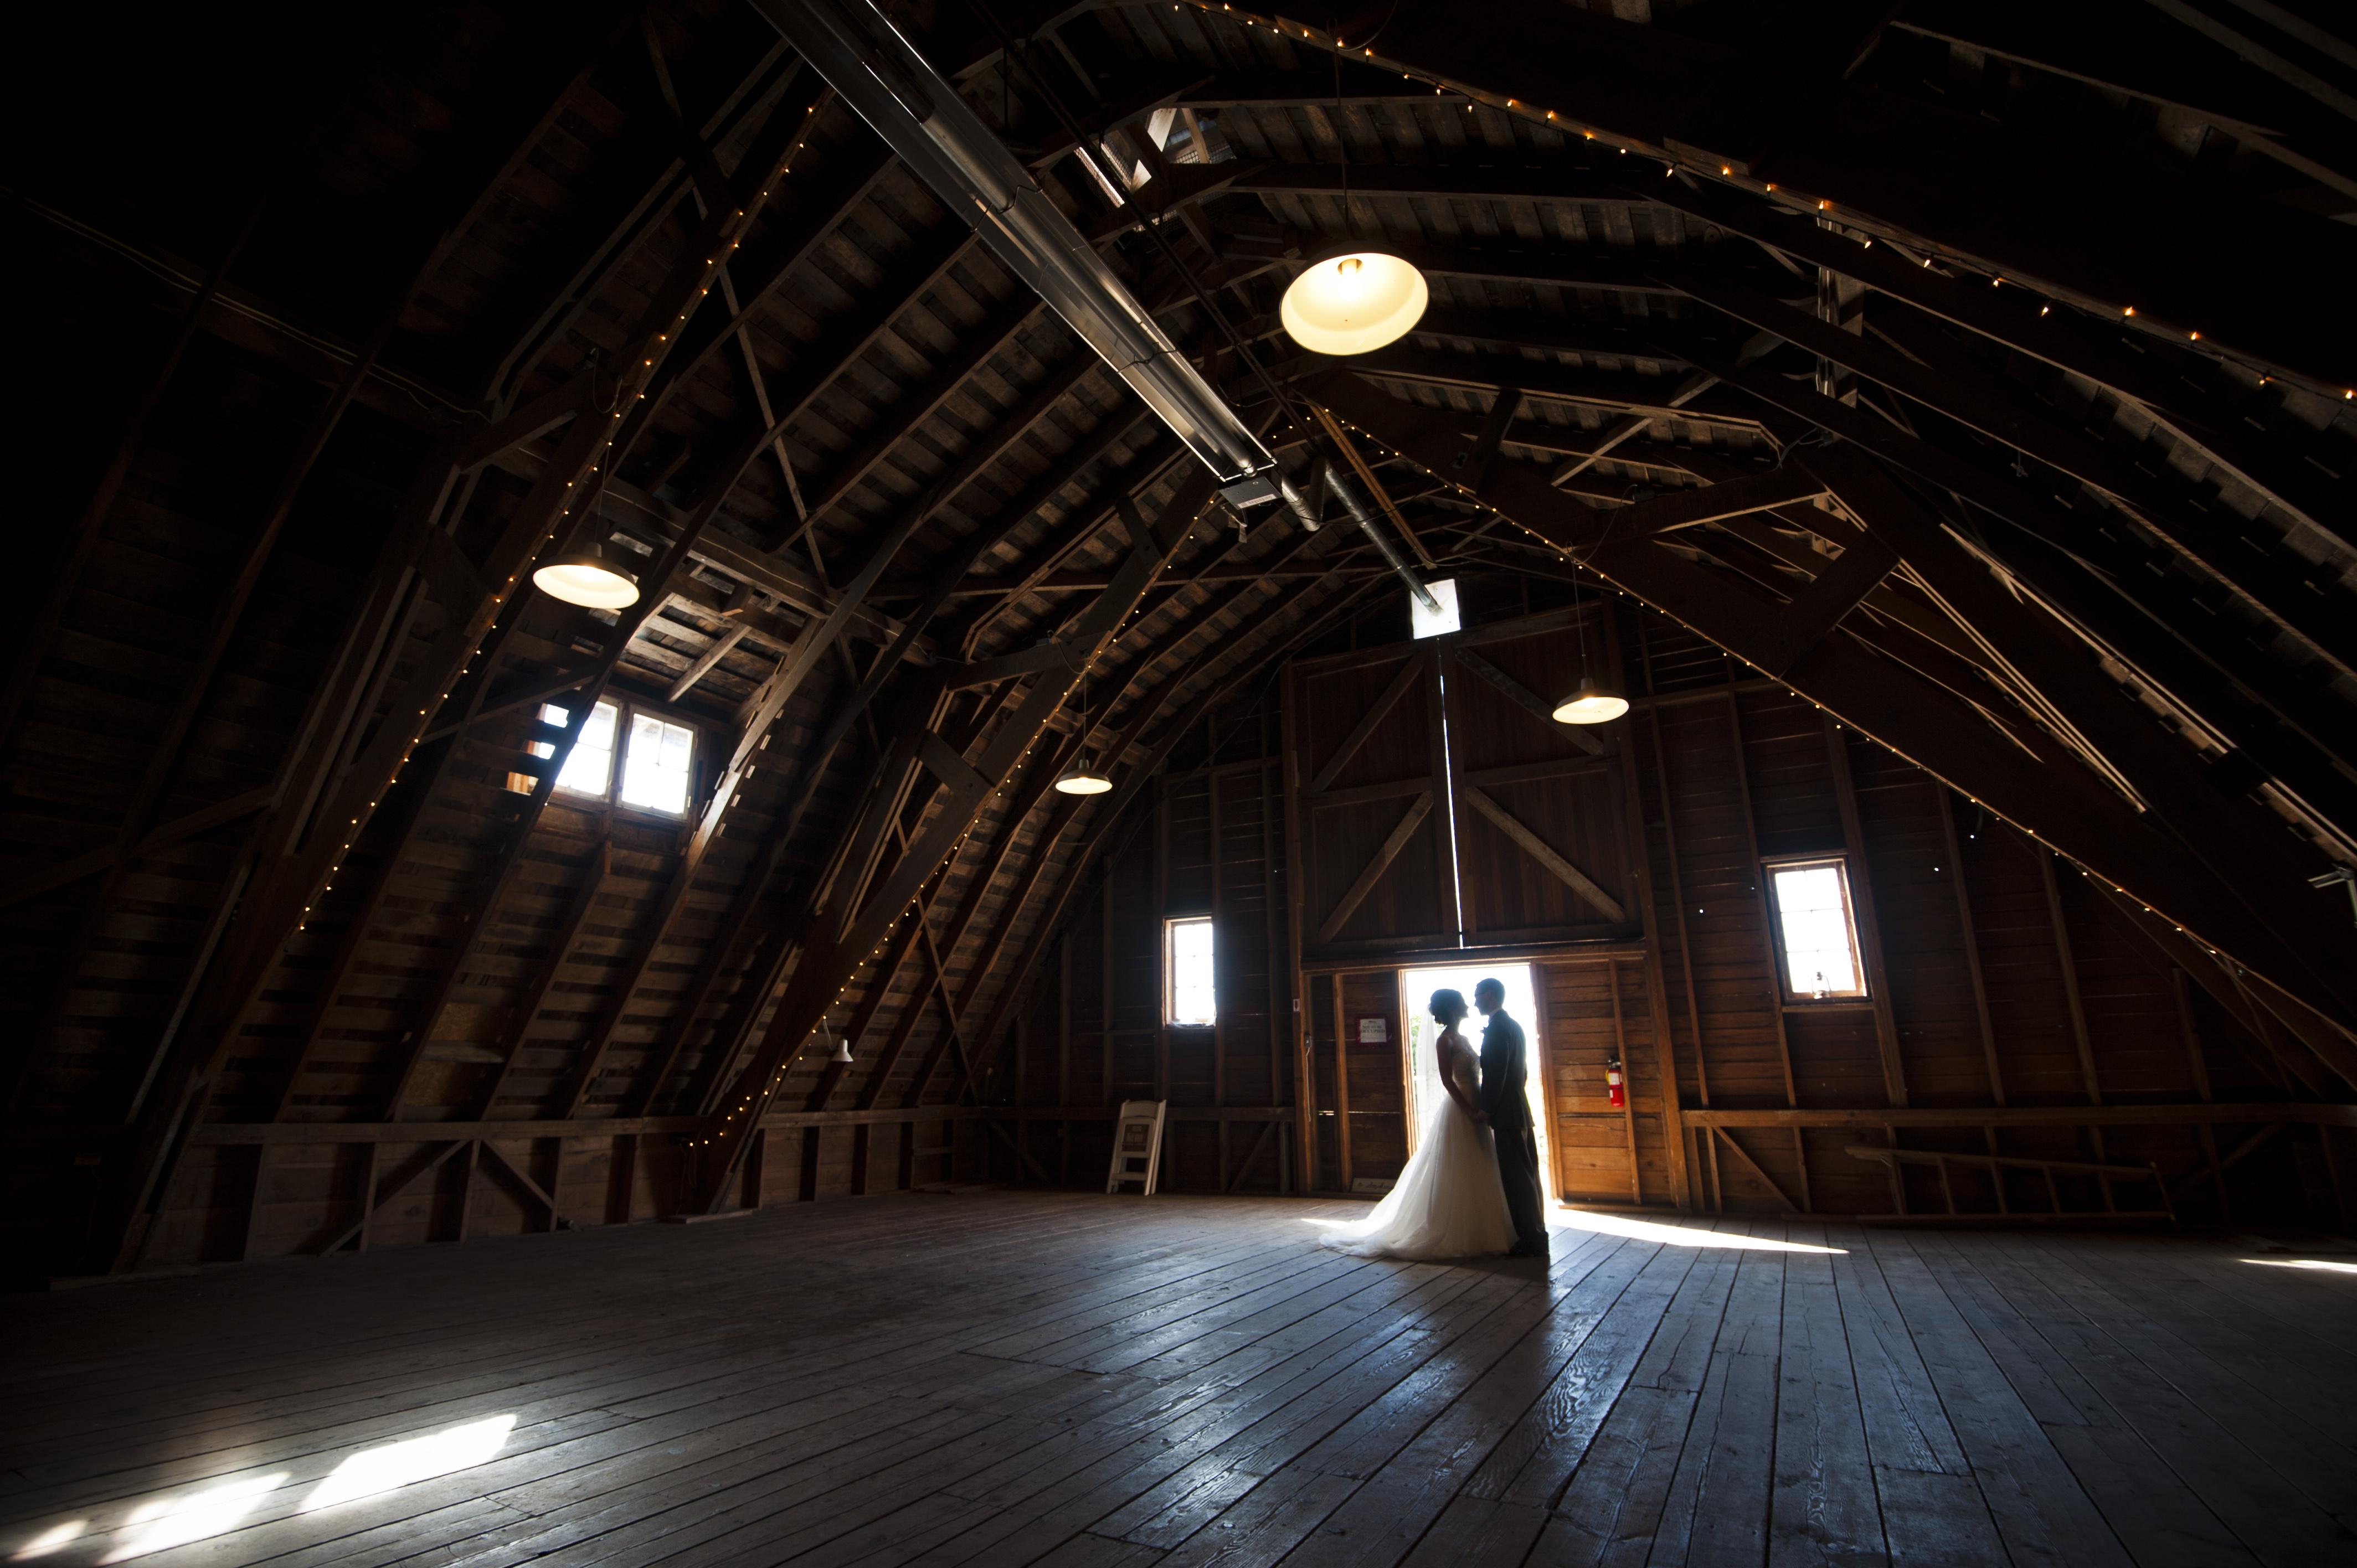 barn wedding photo